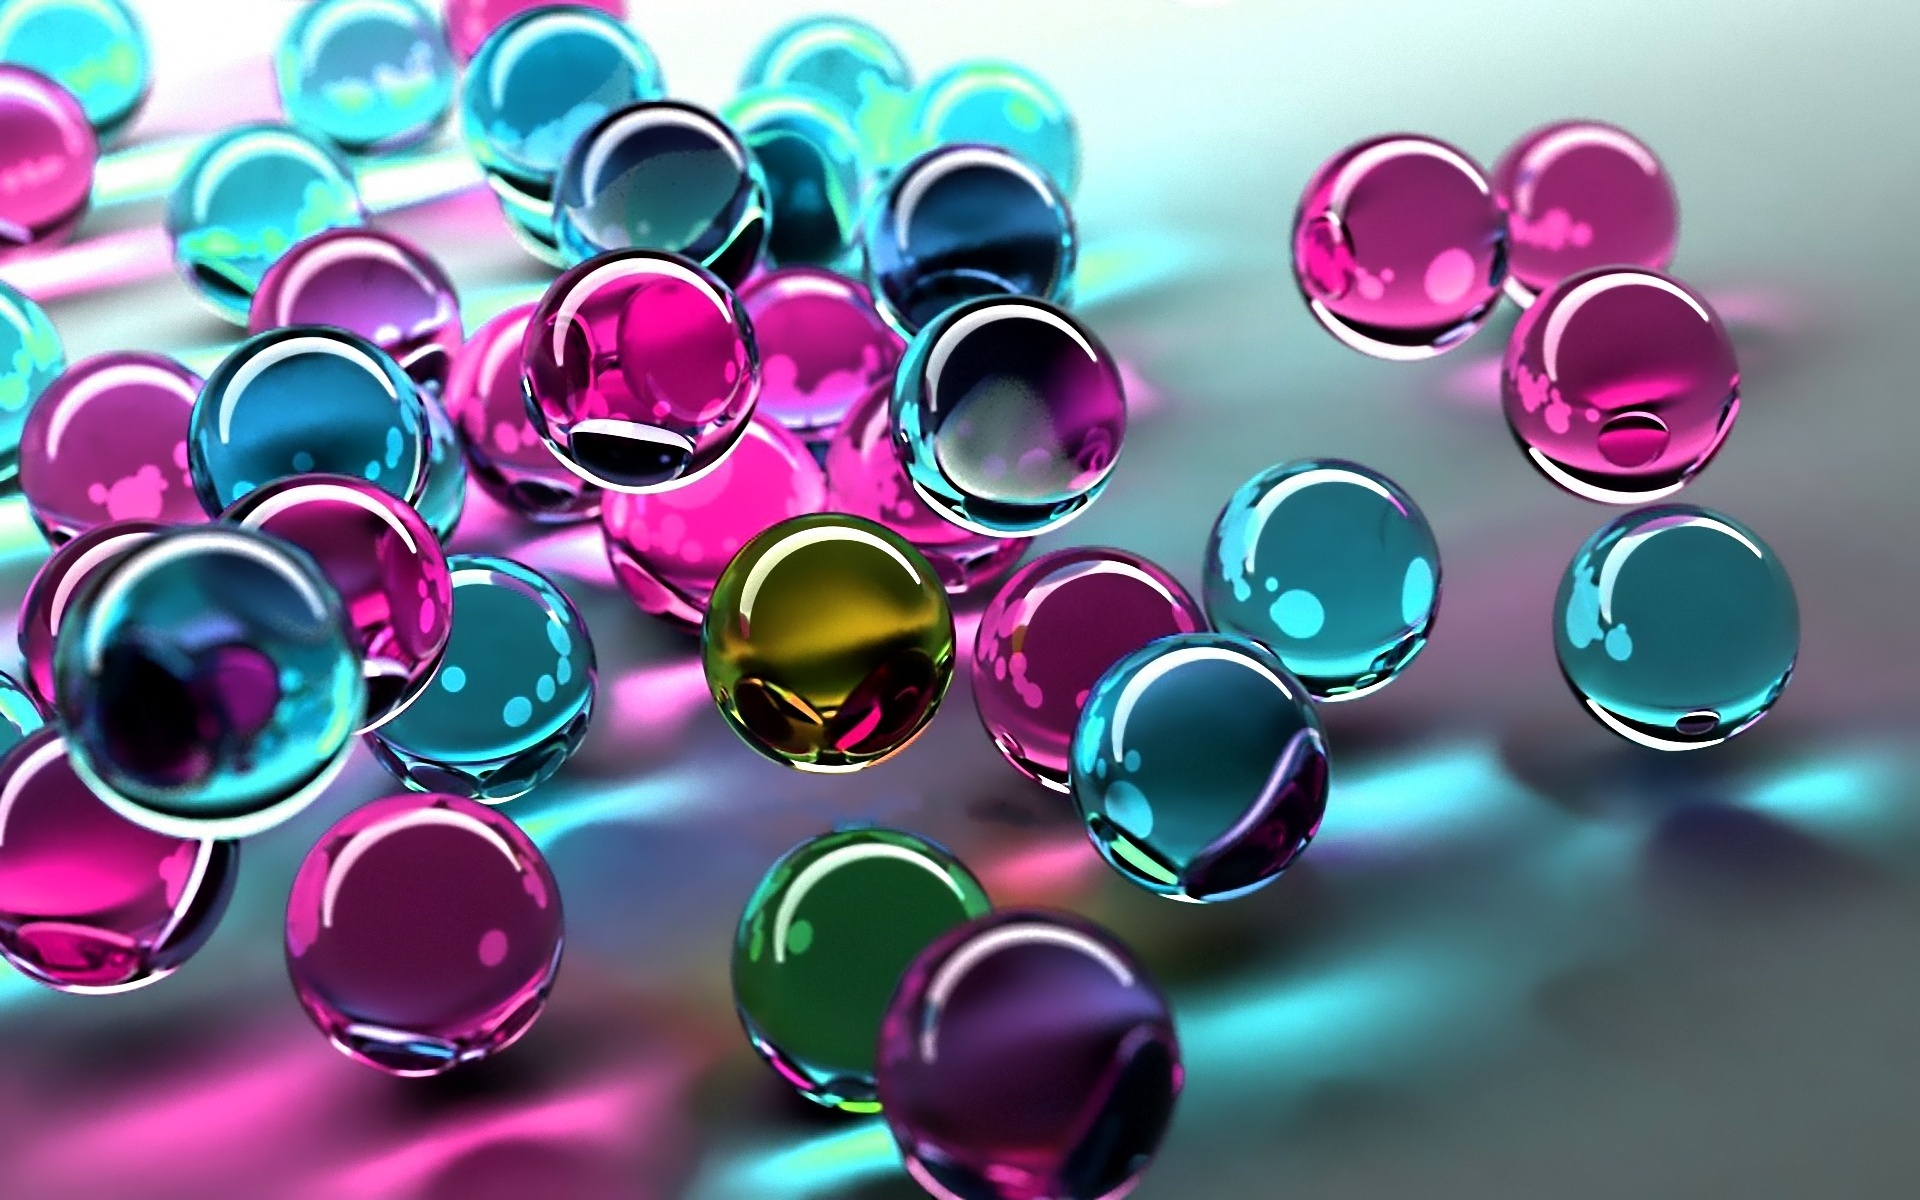 Colorful Balls Of Glass 3d Desktop Wallpaper 2560x1600 ...